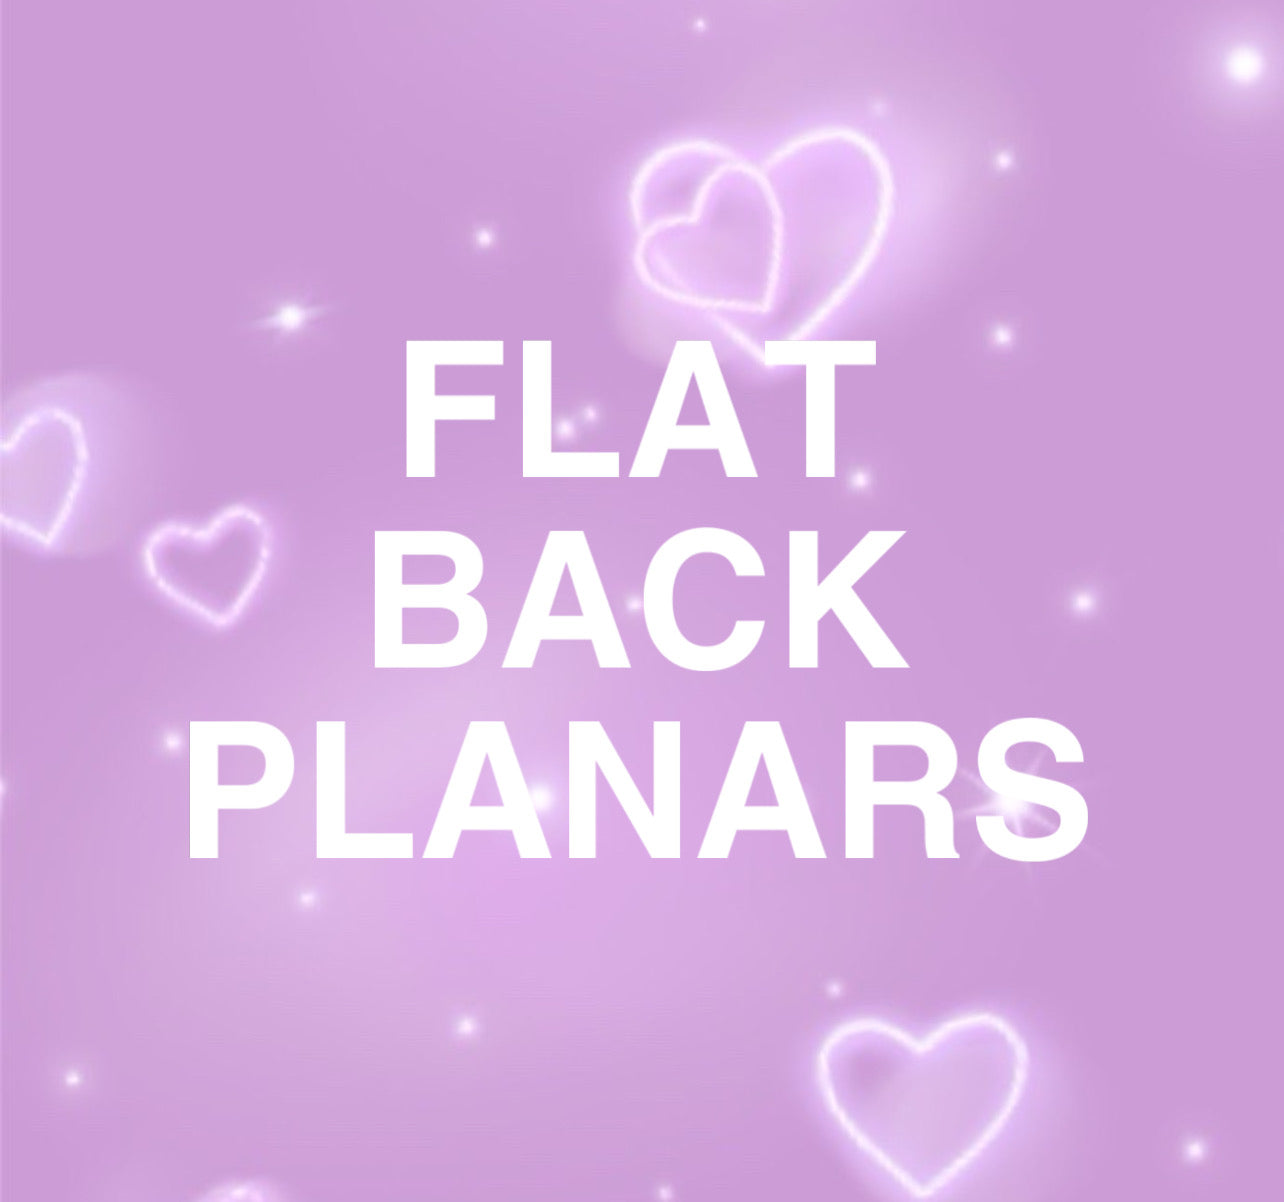 Flat Back Planars